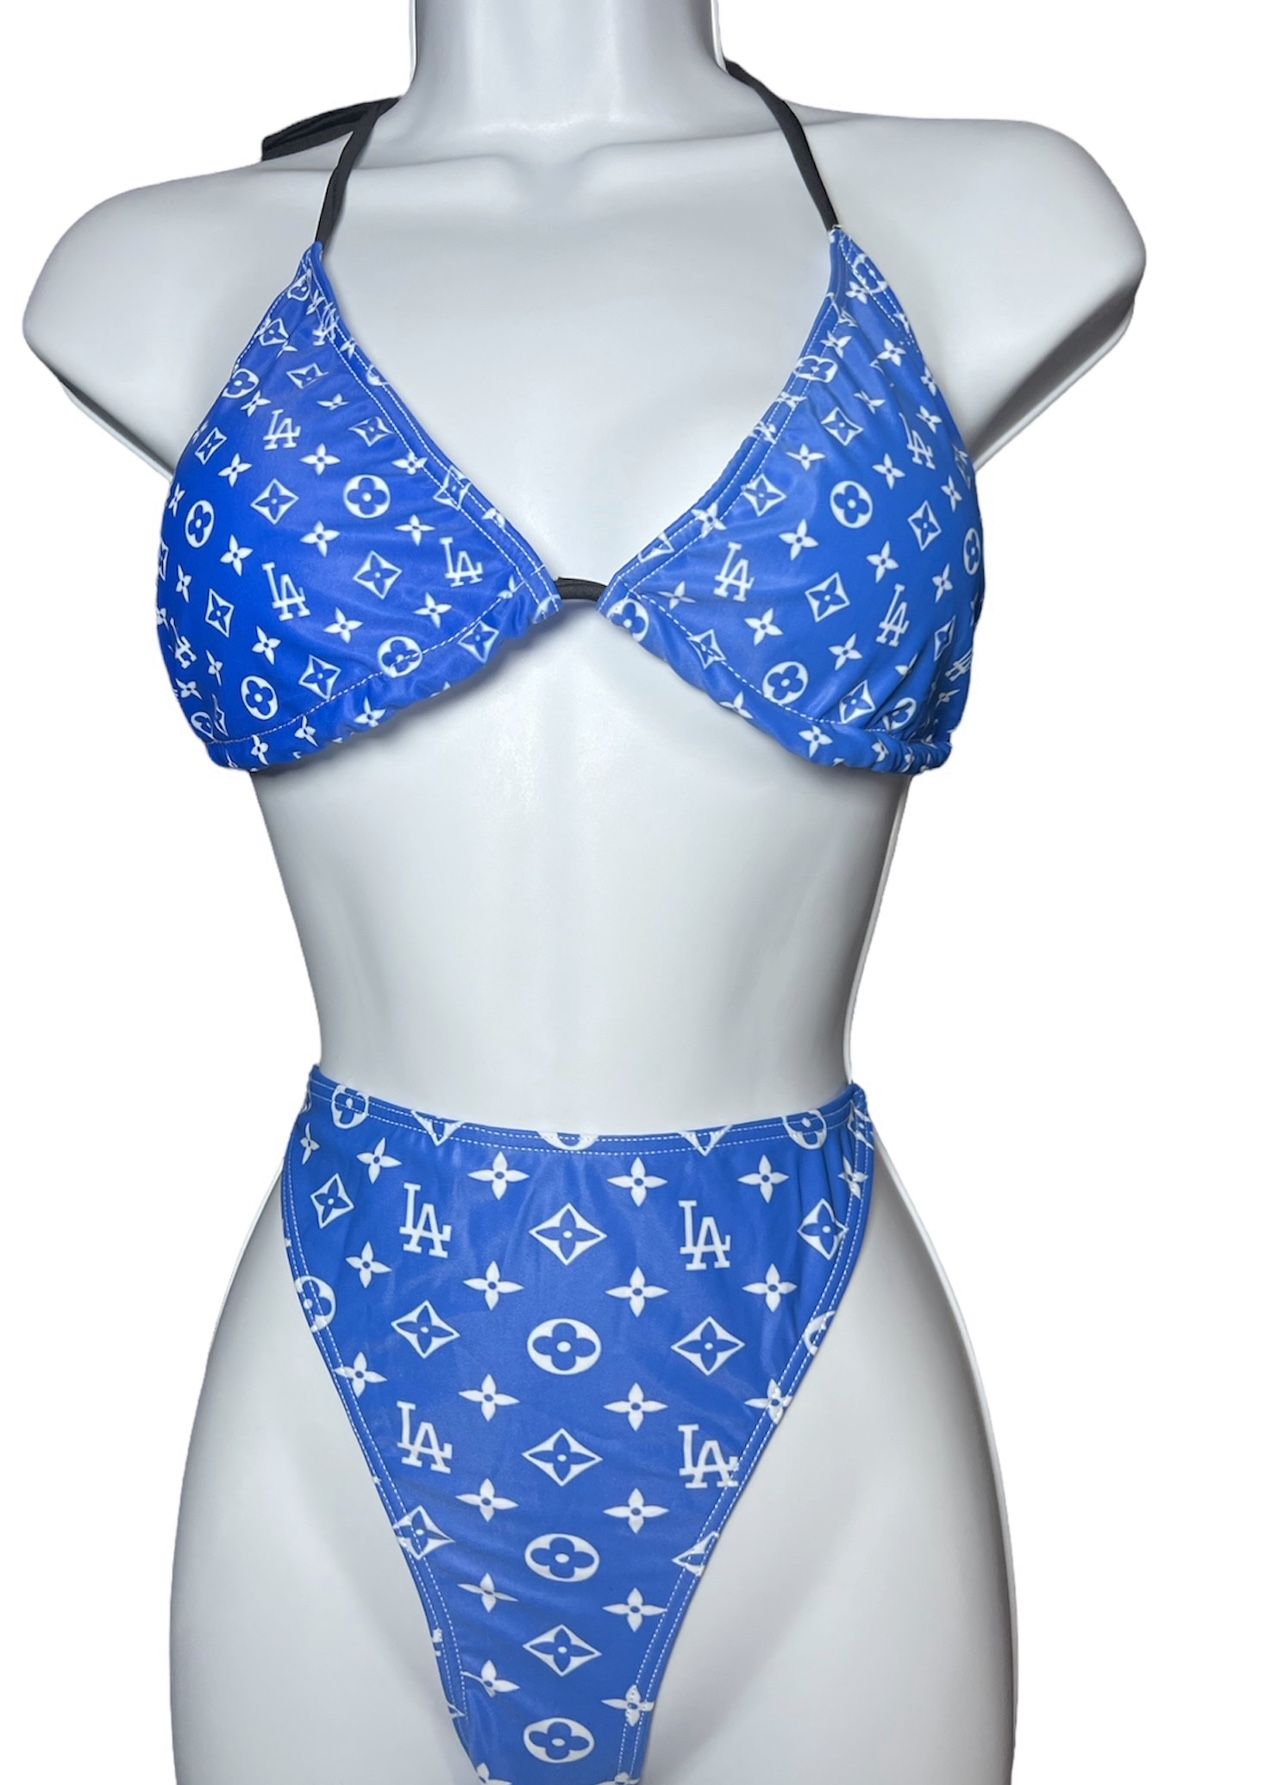 Dodgers Bikini